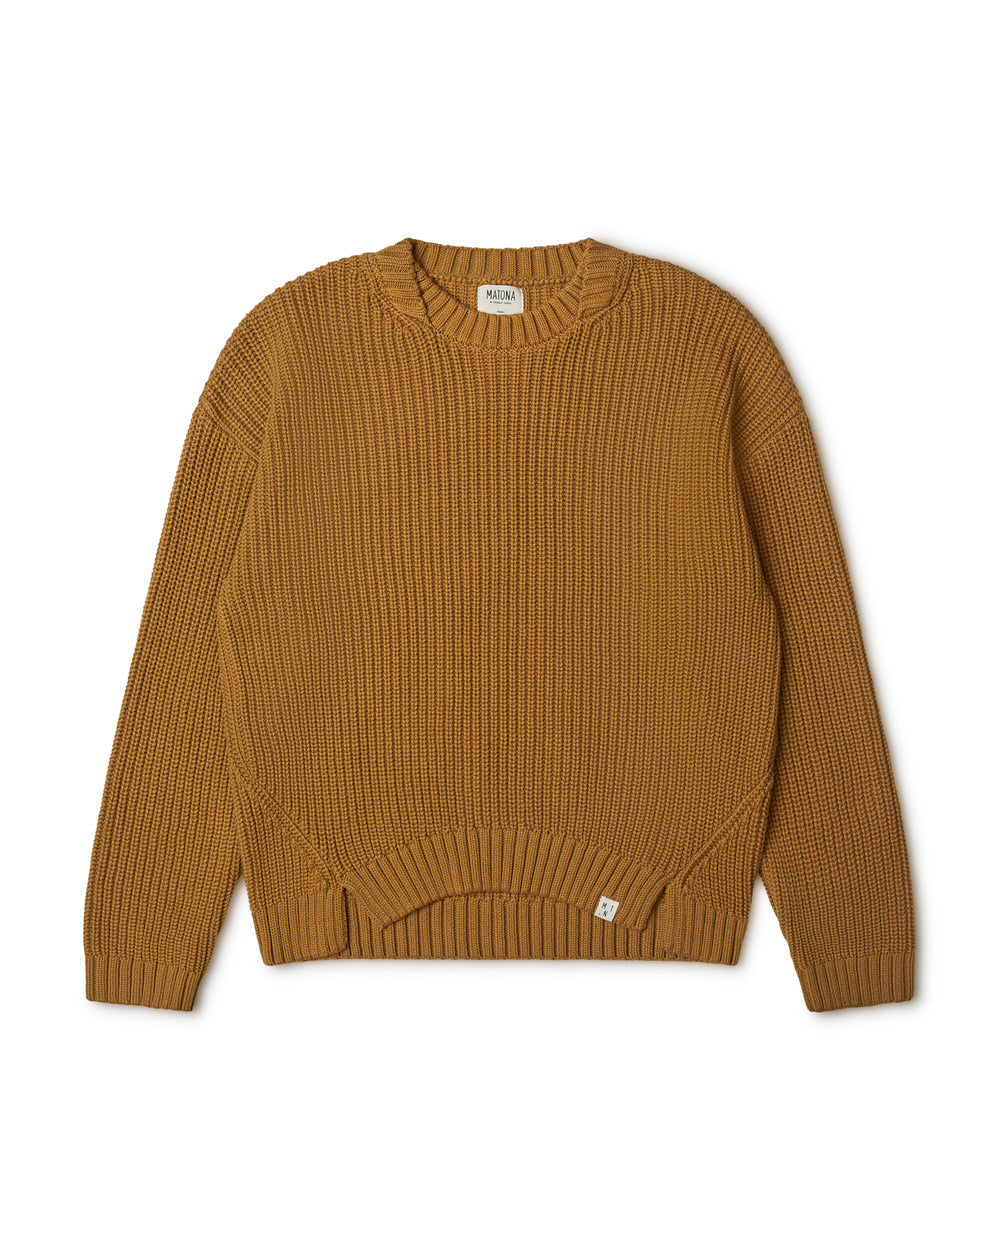 Mustard yellow knitted sweater made of organic cotton from Matona